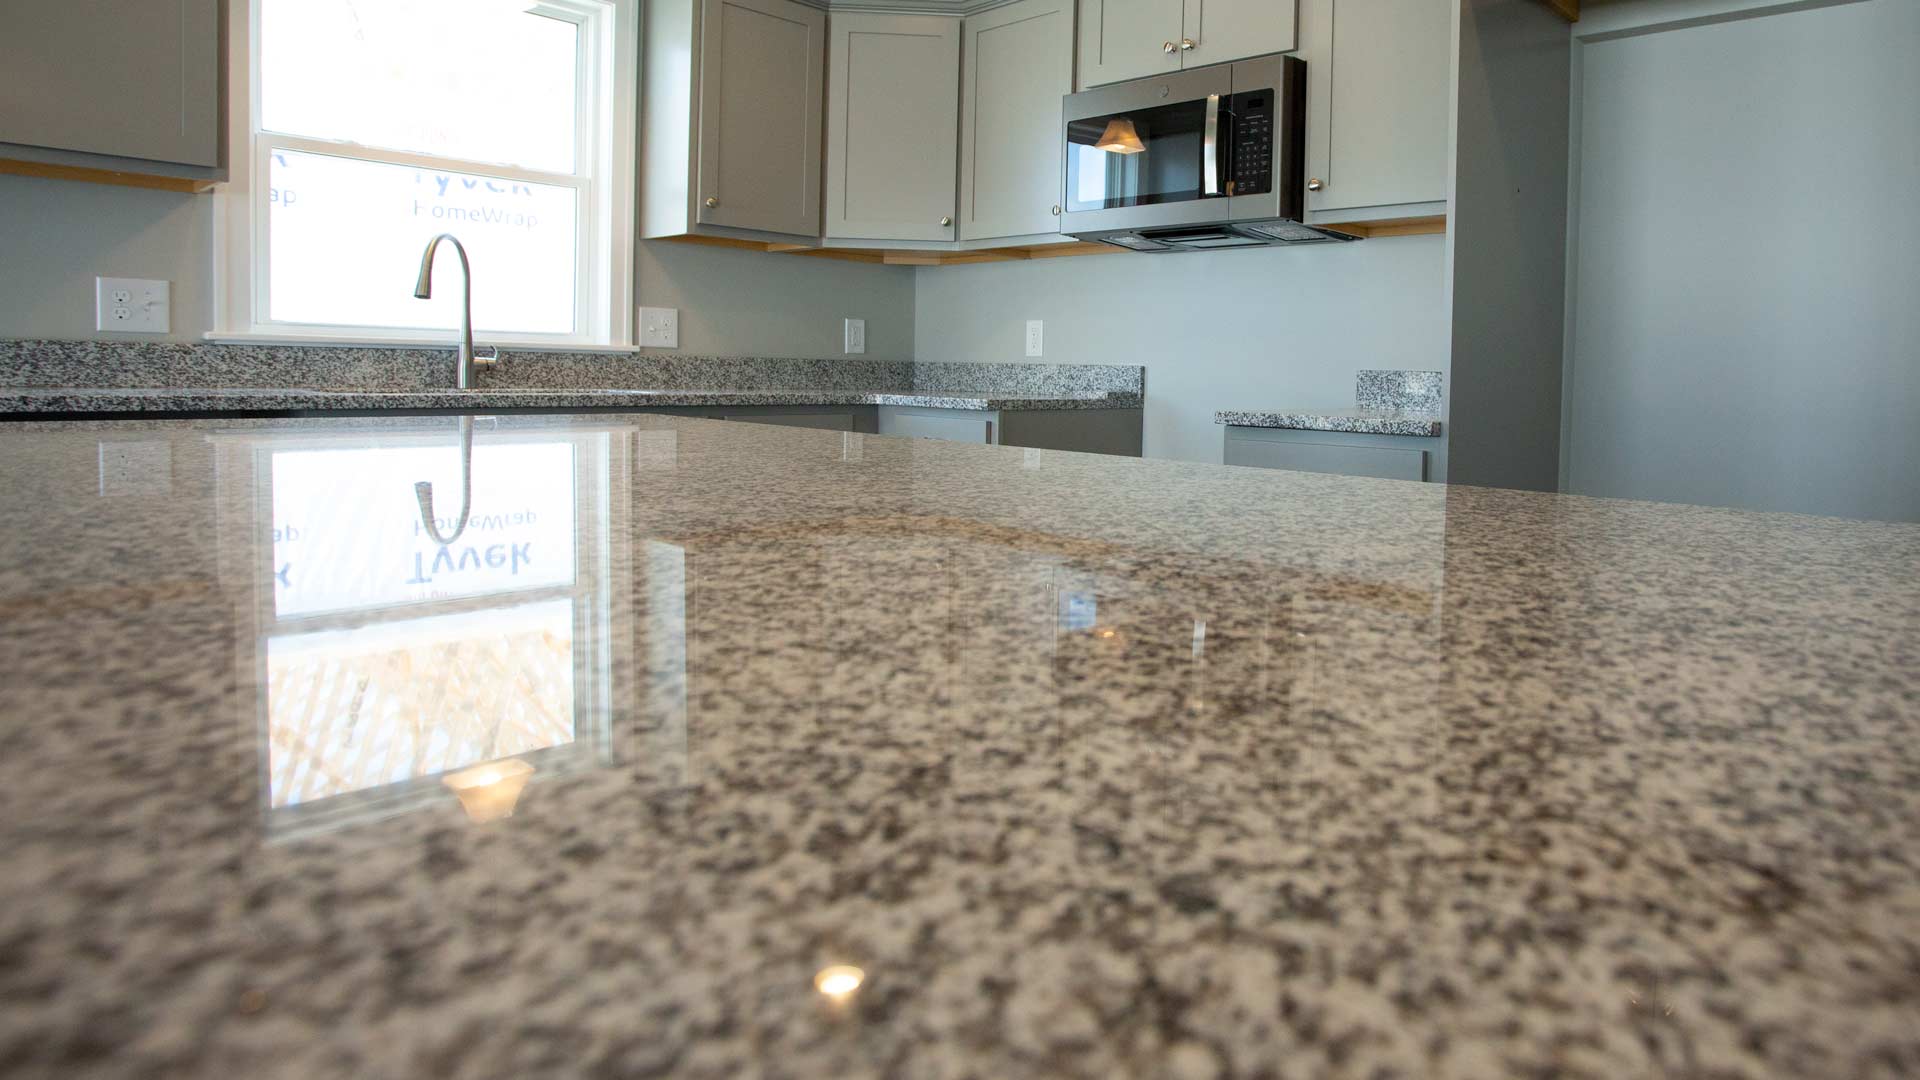 Granite countertop with flecks of white, grey and black on kitchen island